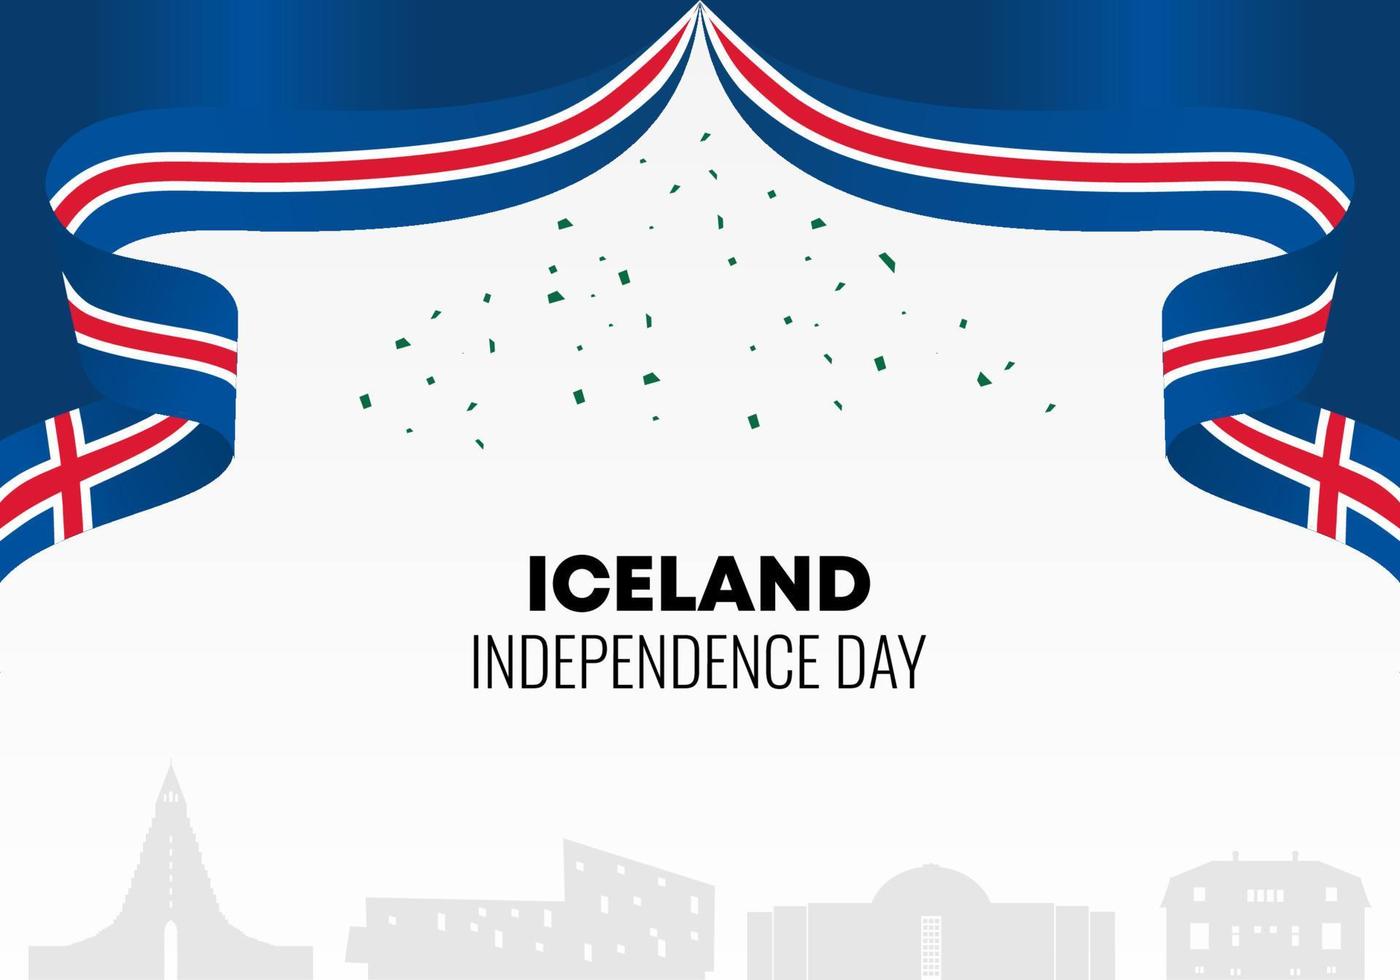 Iceland independence day background poster for national celebration. vector